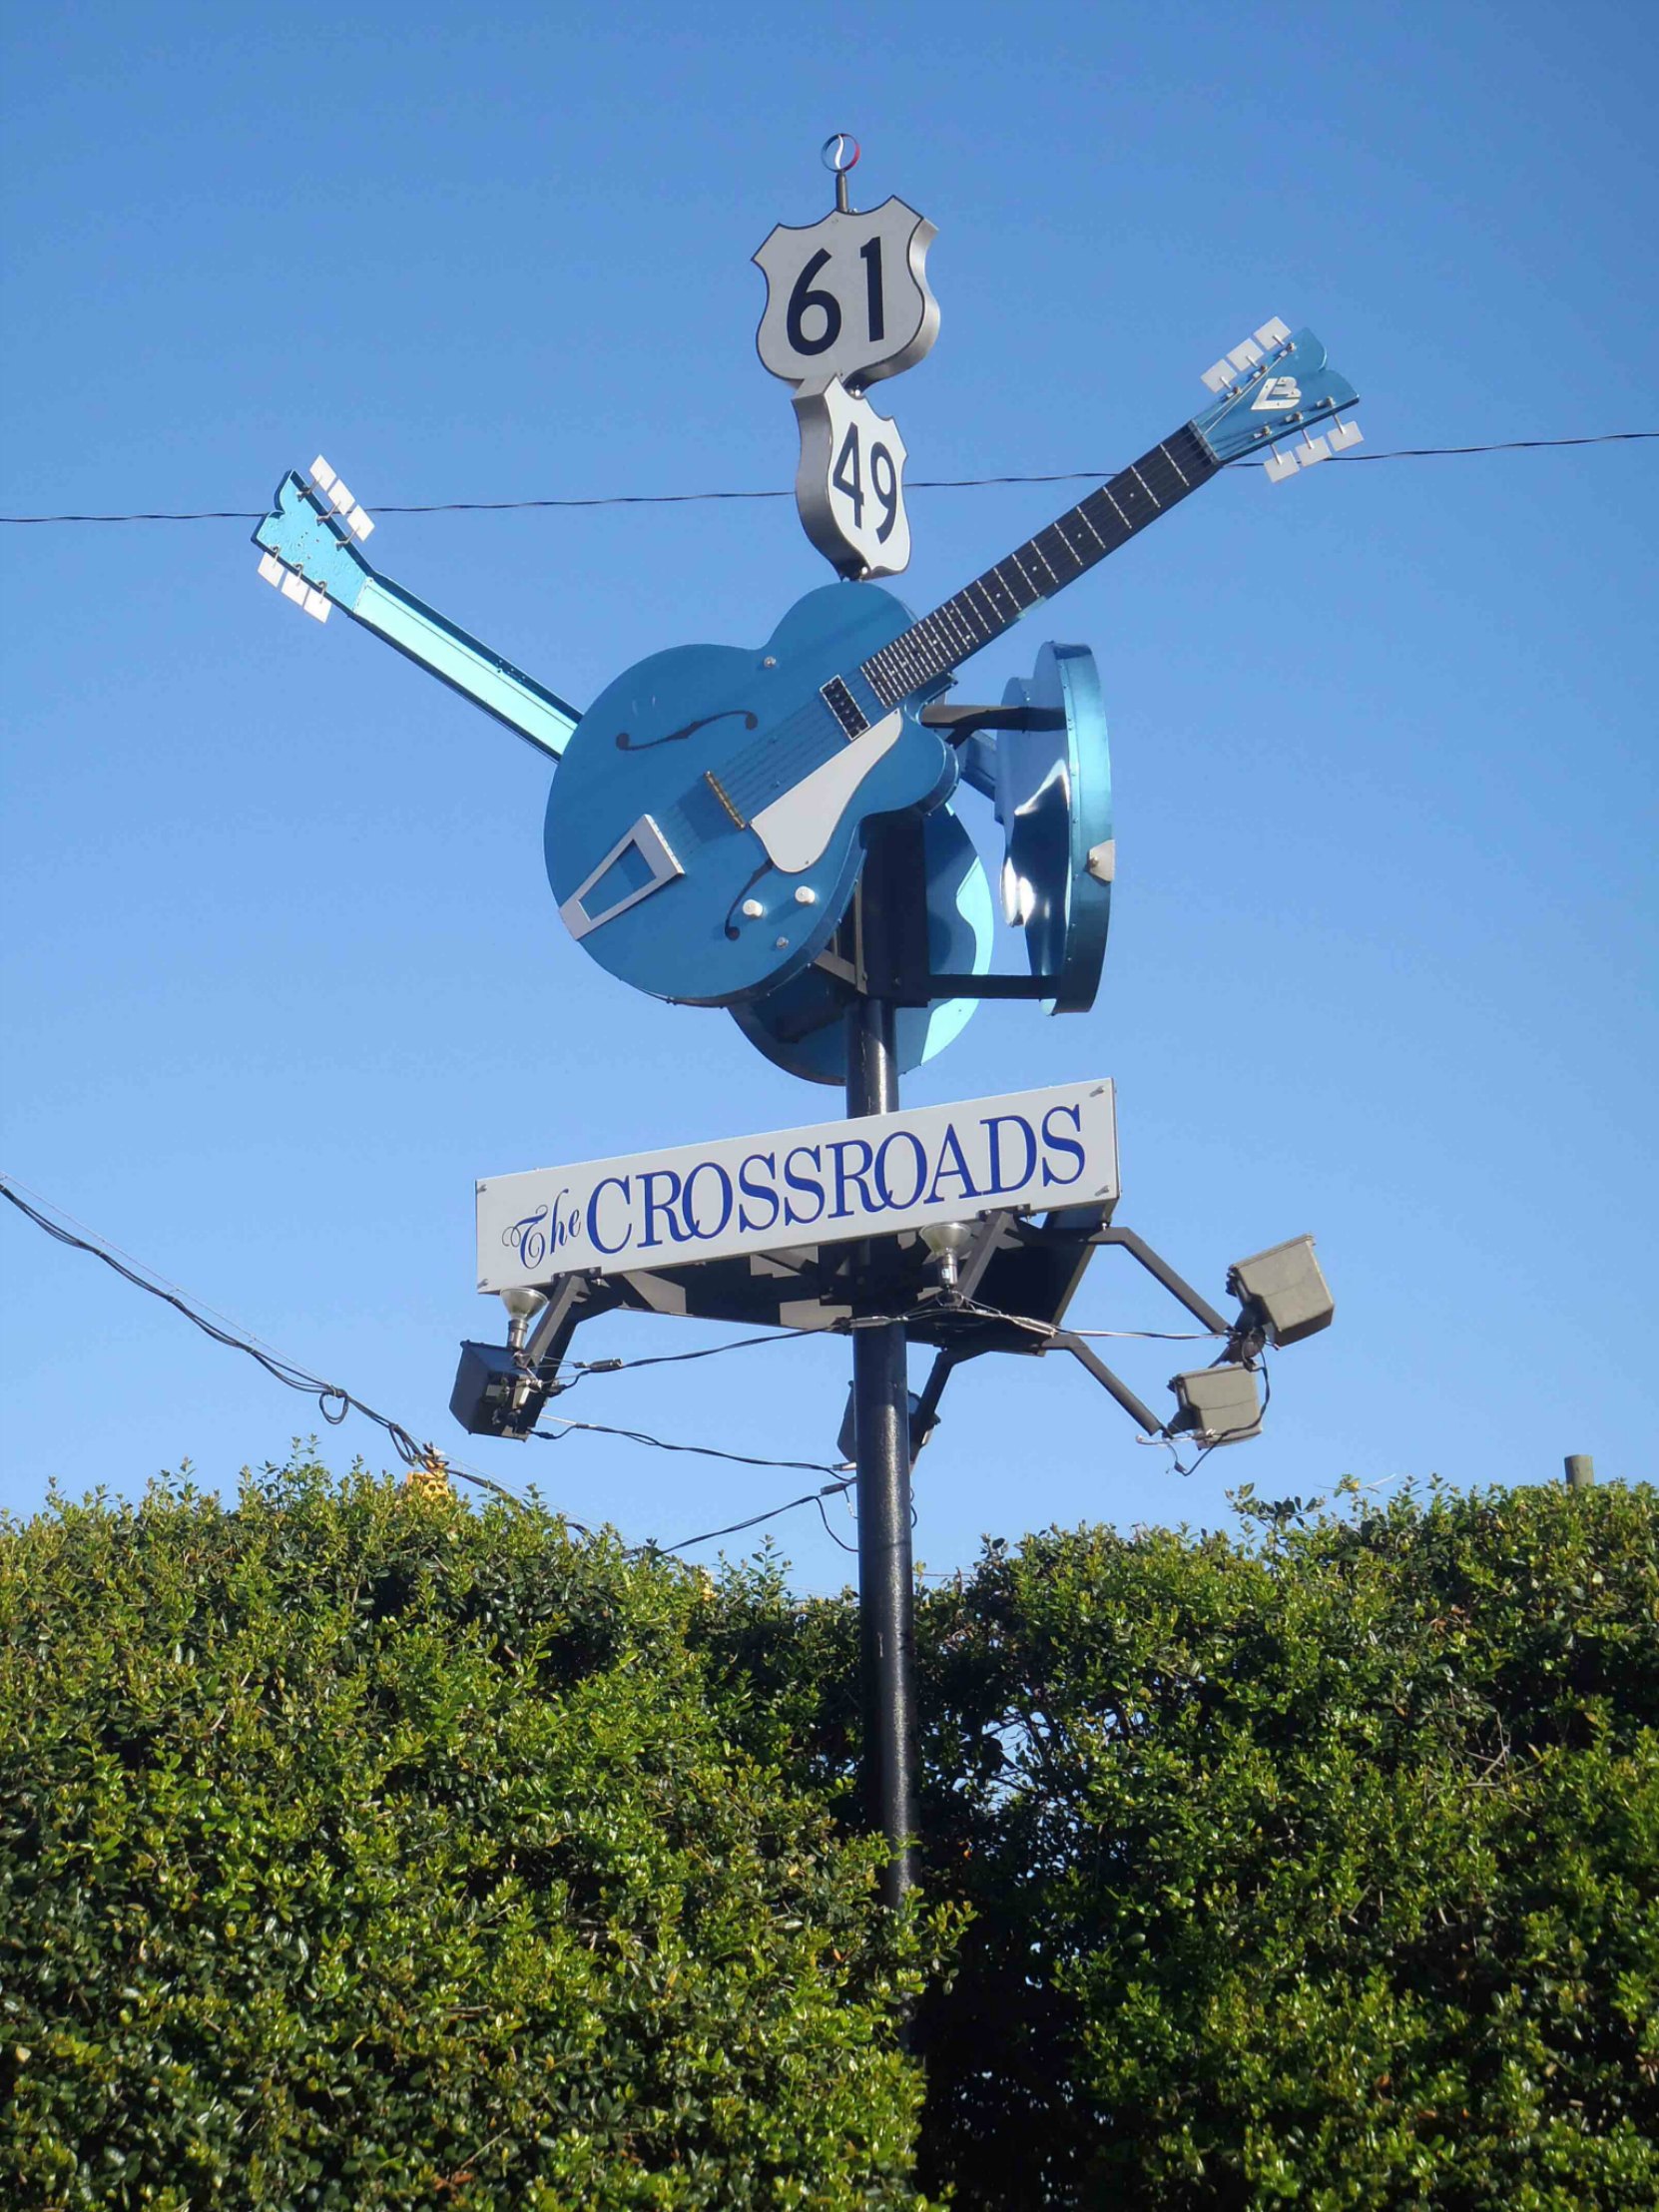 Image result for crossroads 61 49